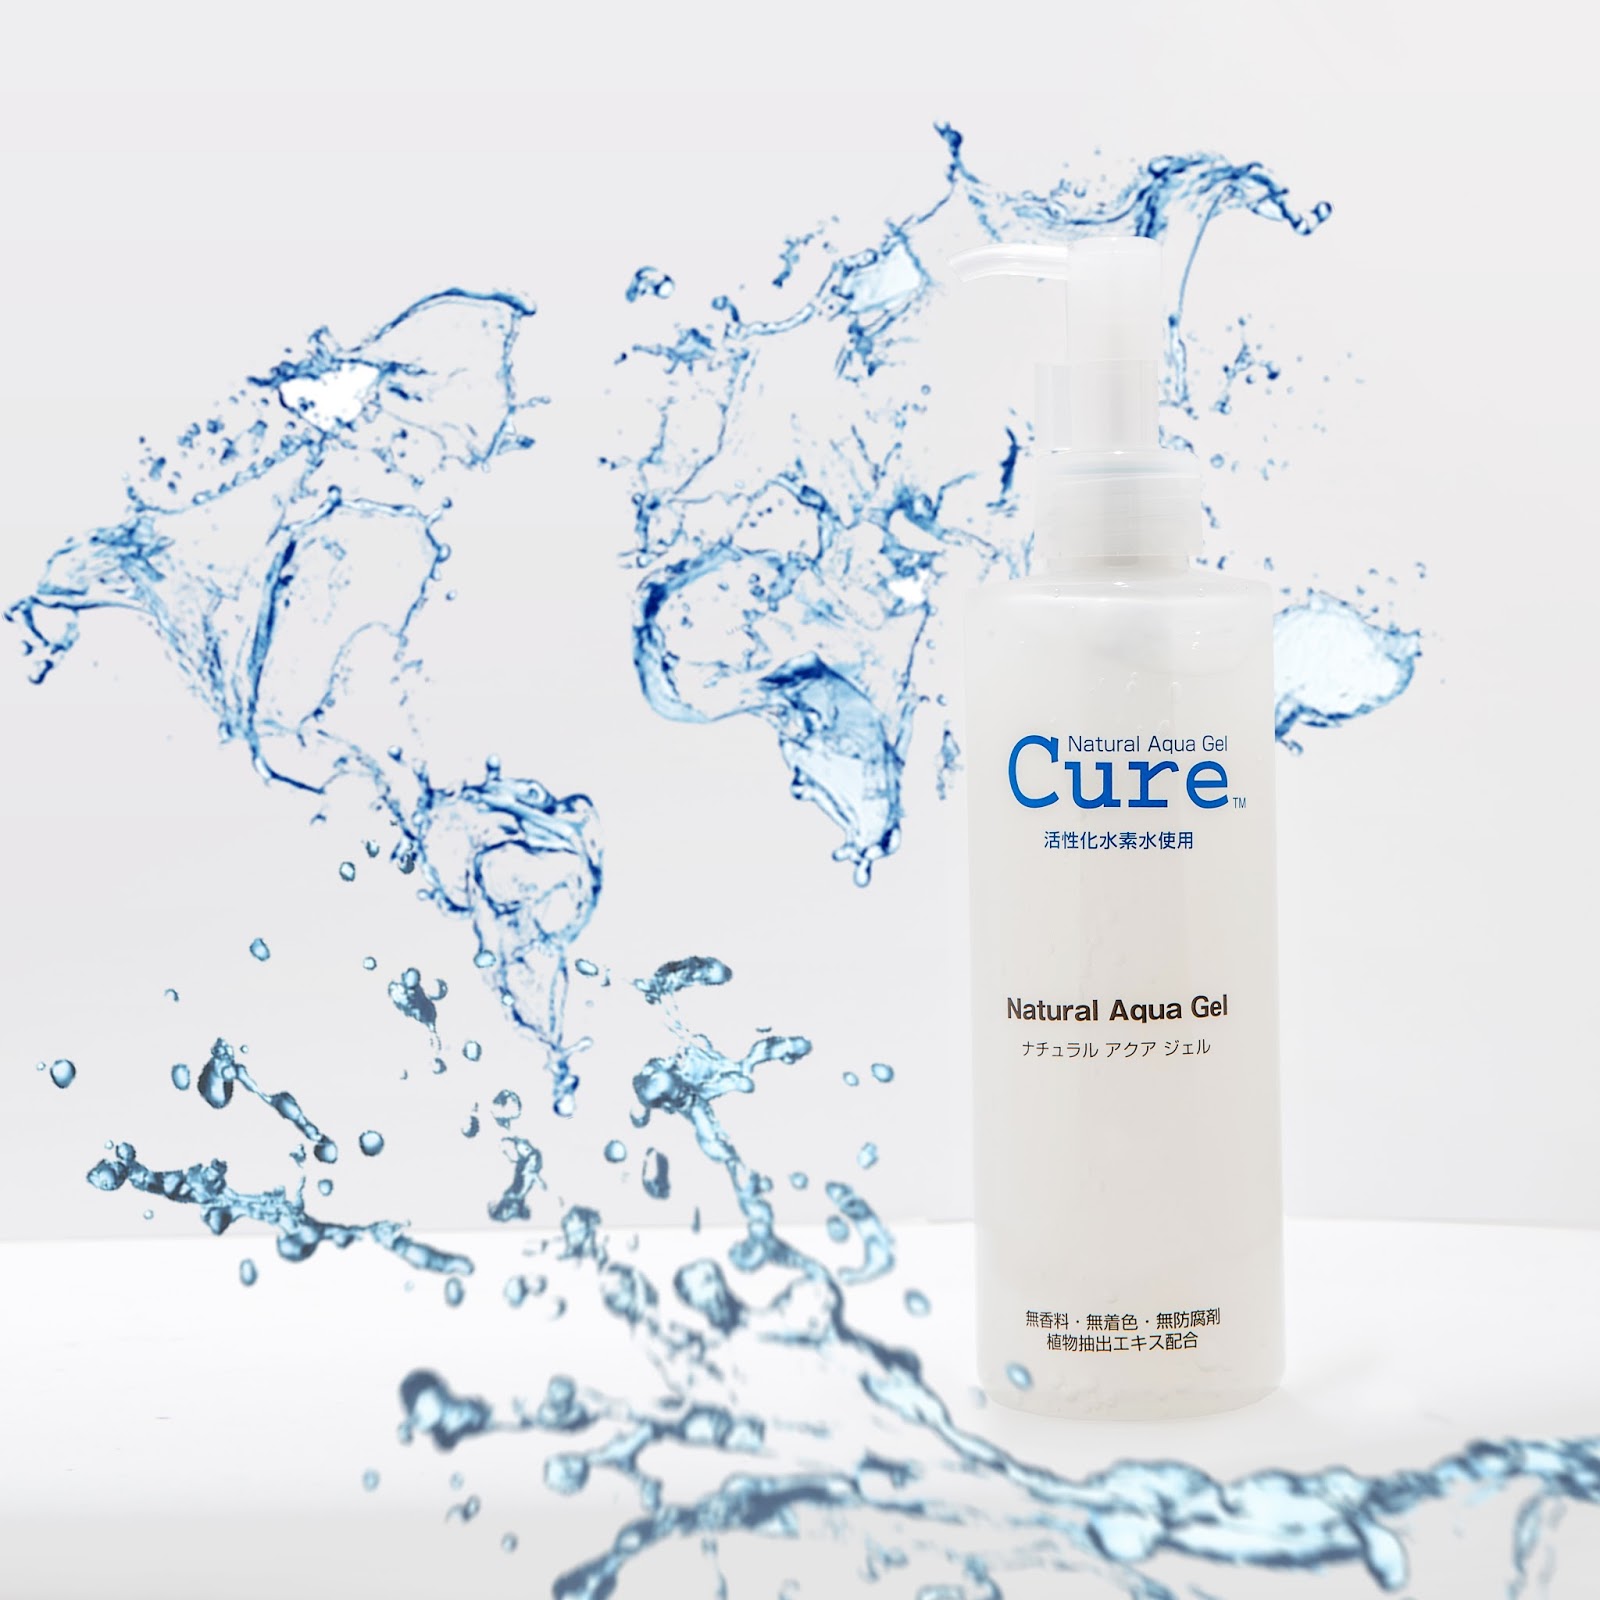 Aqua gel отзывы. Cure natural Aqua Gel. Cure пилинг. Cure Aqua Gel для лица Япония. Natural Aqua Gel Cure фирма чья.